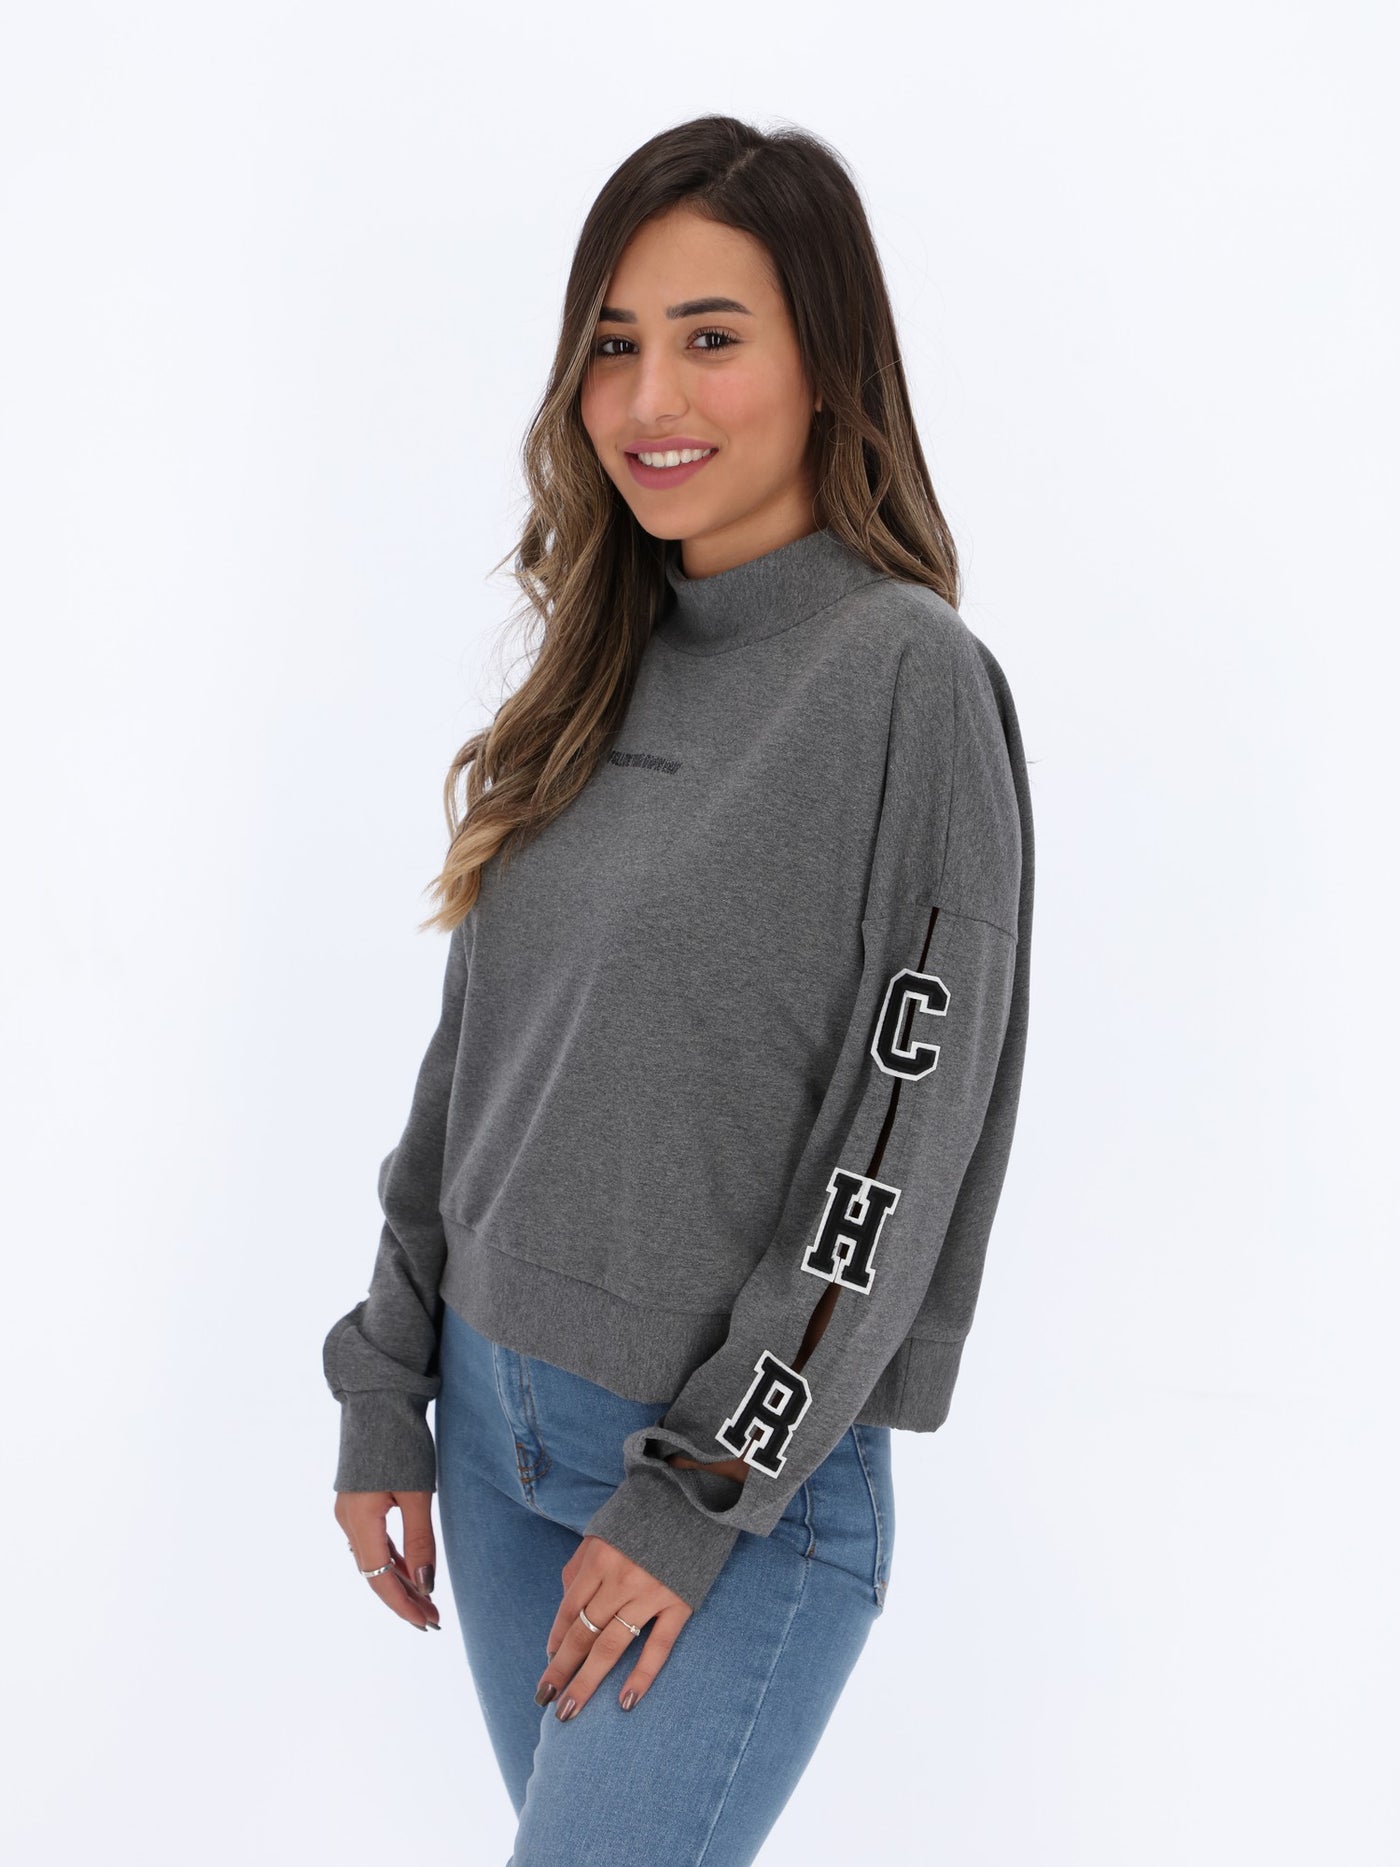 OR Women’s CHR Sweatshirt